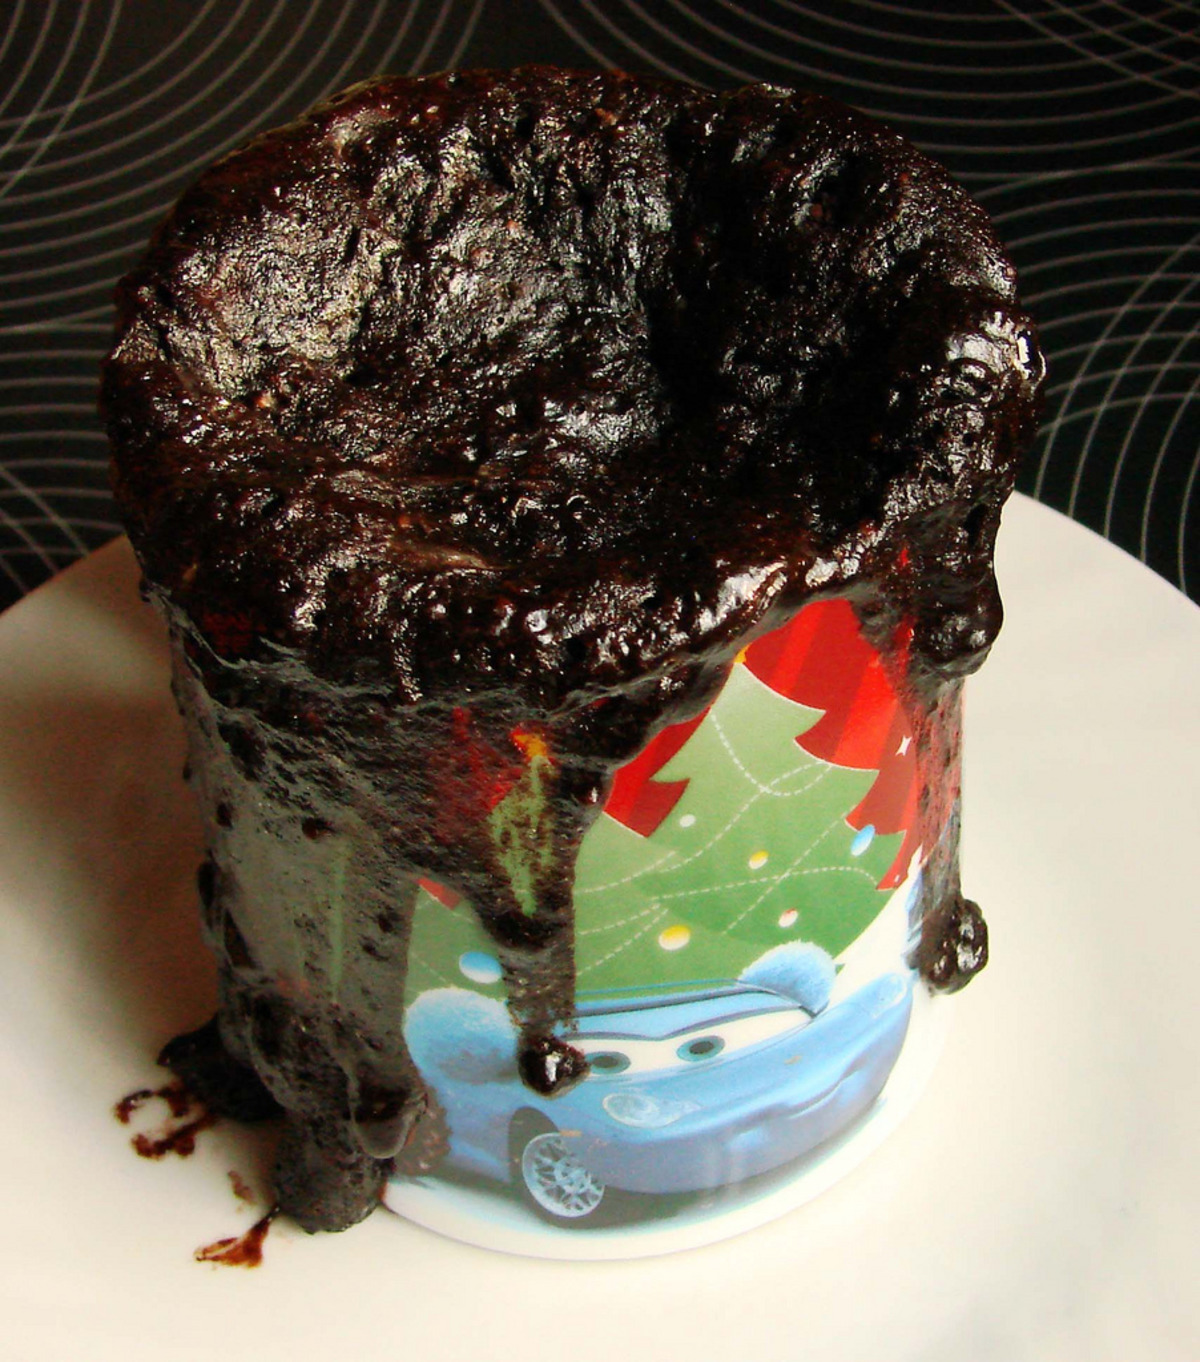 Nutella Mug Cake Recipe (Microwave Mug Cake) • MidgetMomma